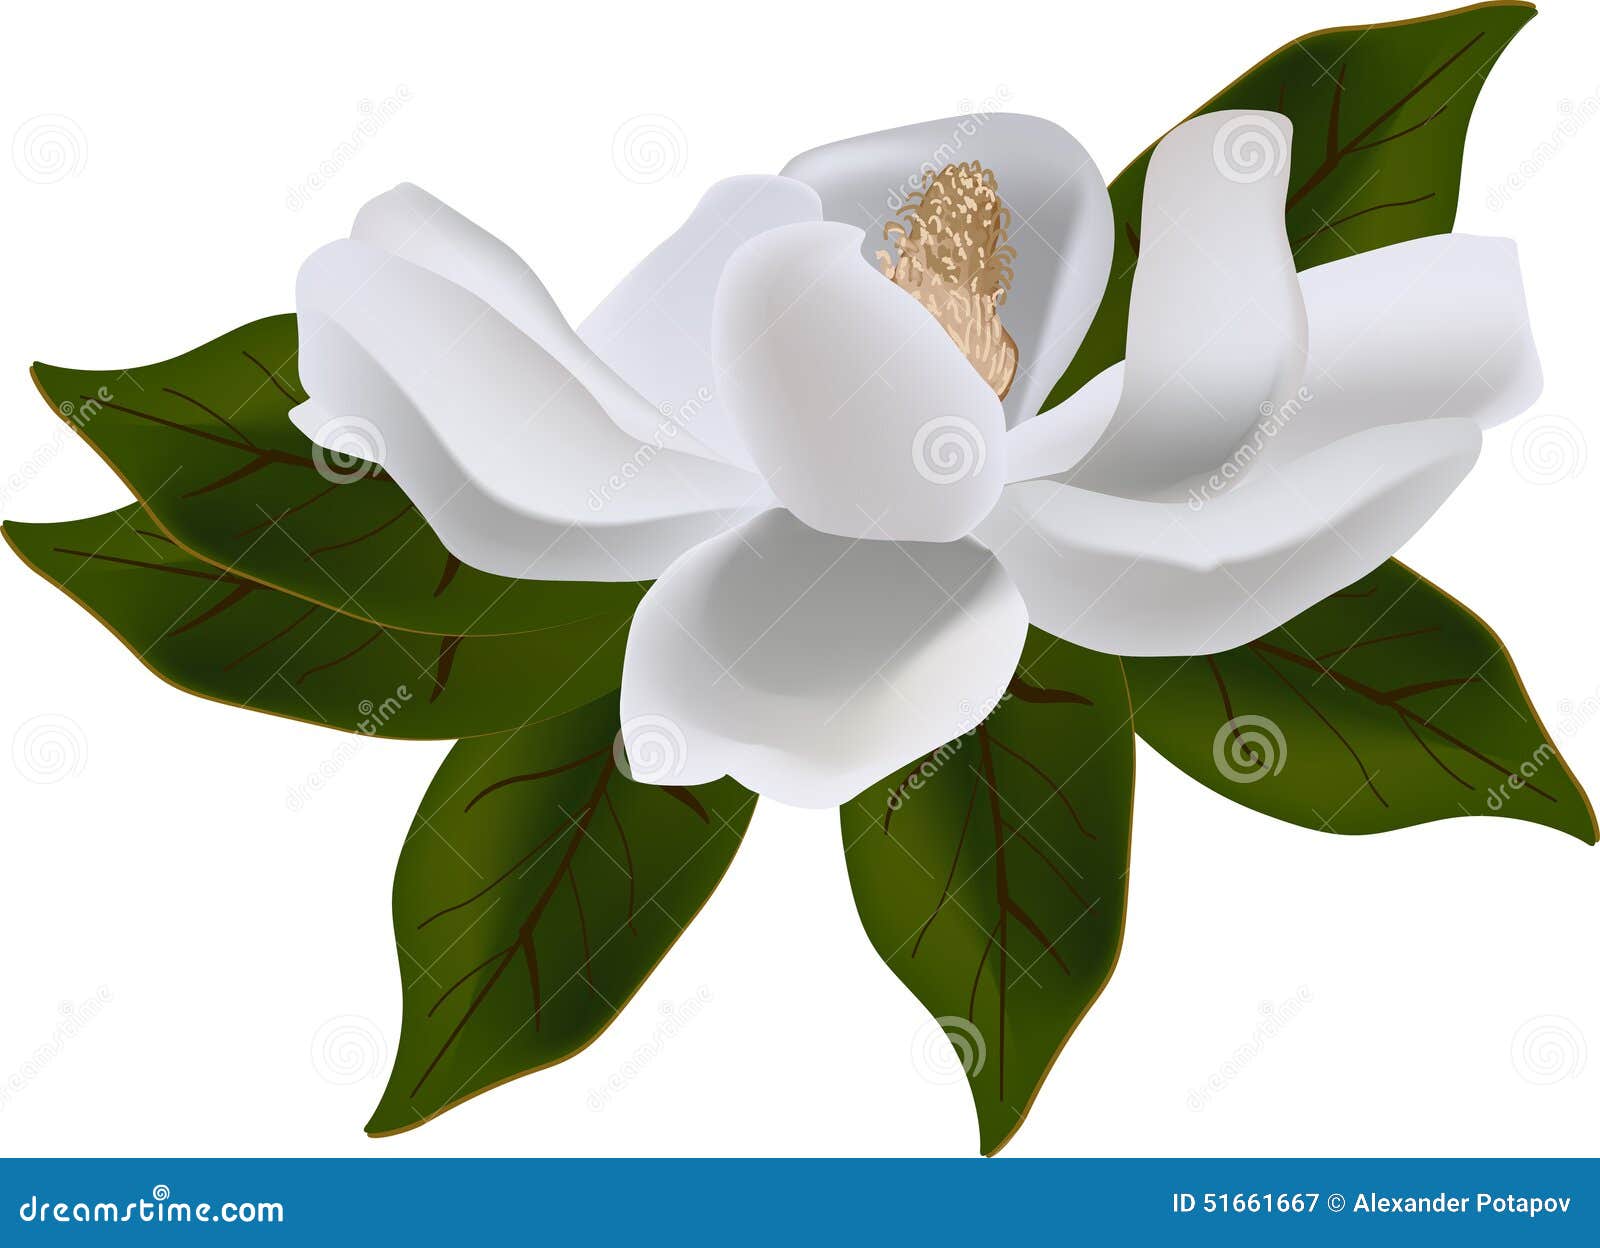 free clip art magnolia flower - photo #22